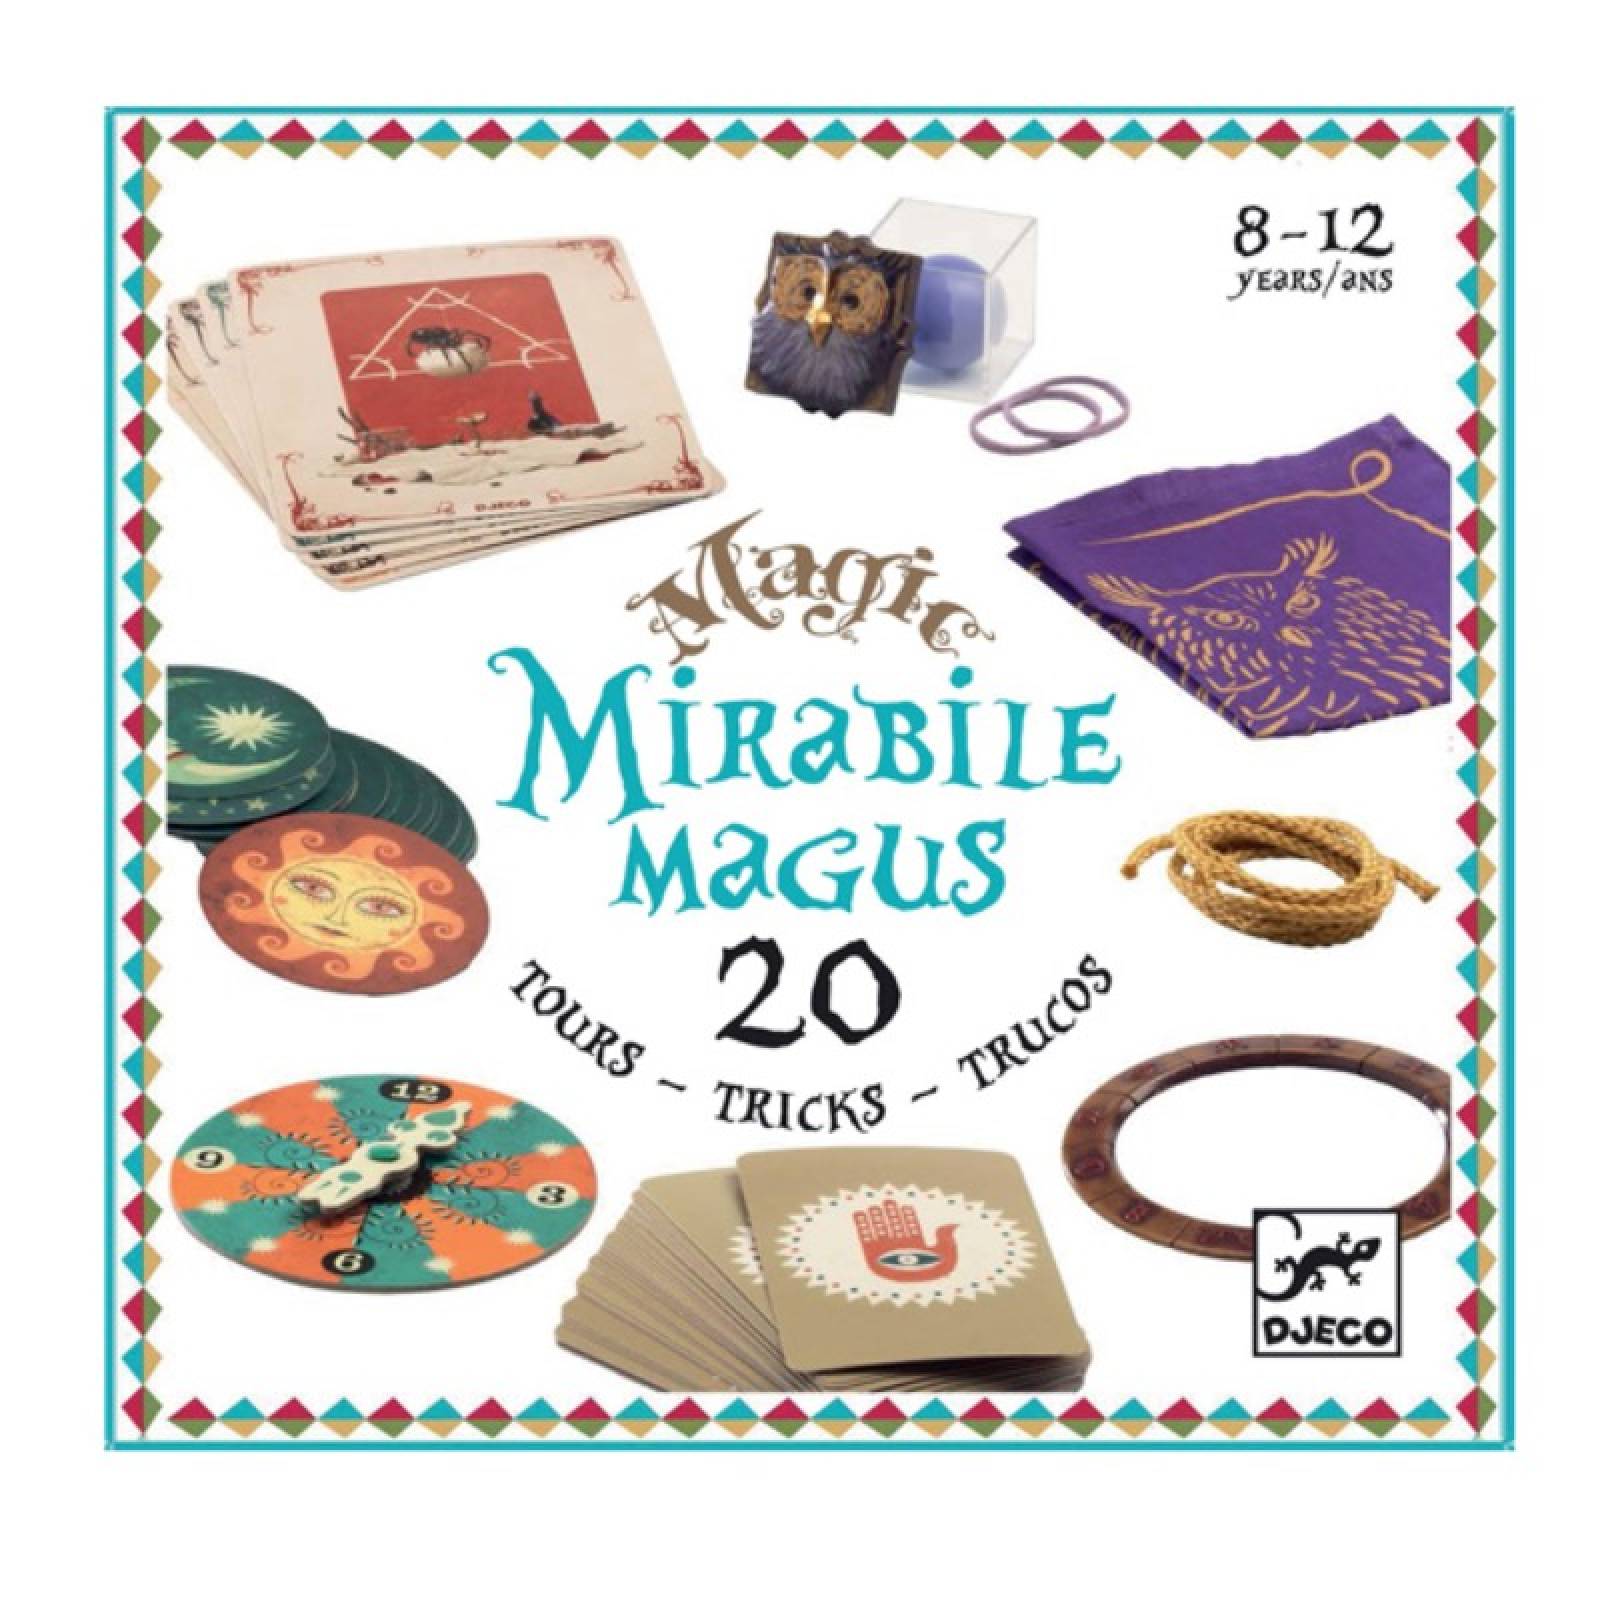 Mirabile Magus Magic Trick Box By Djeco 8+